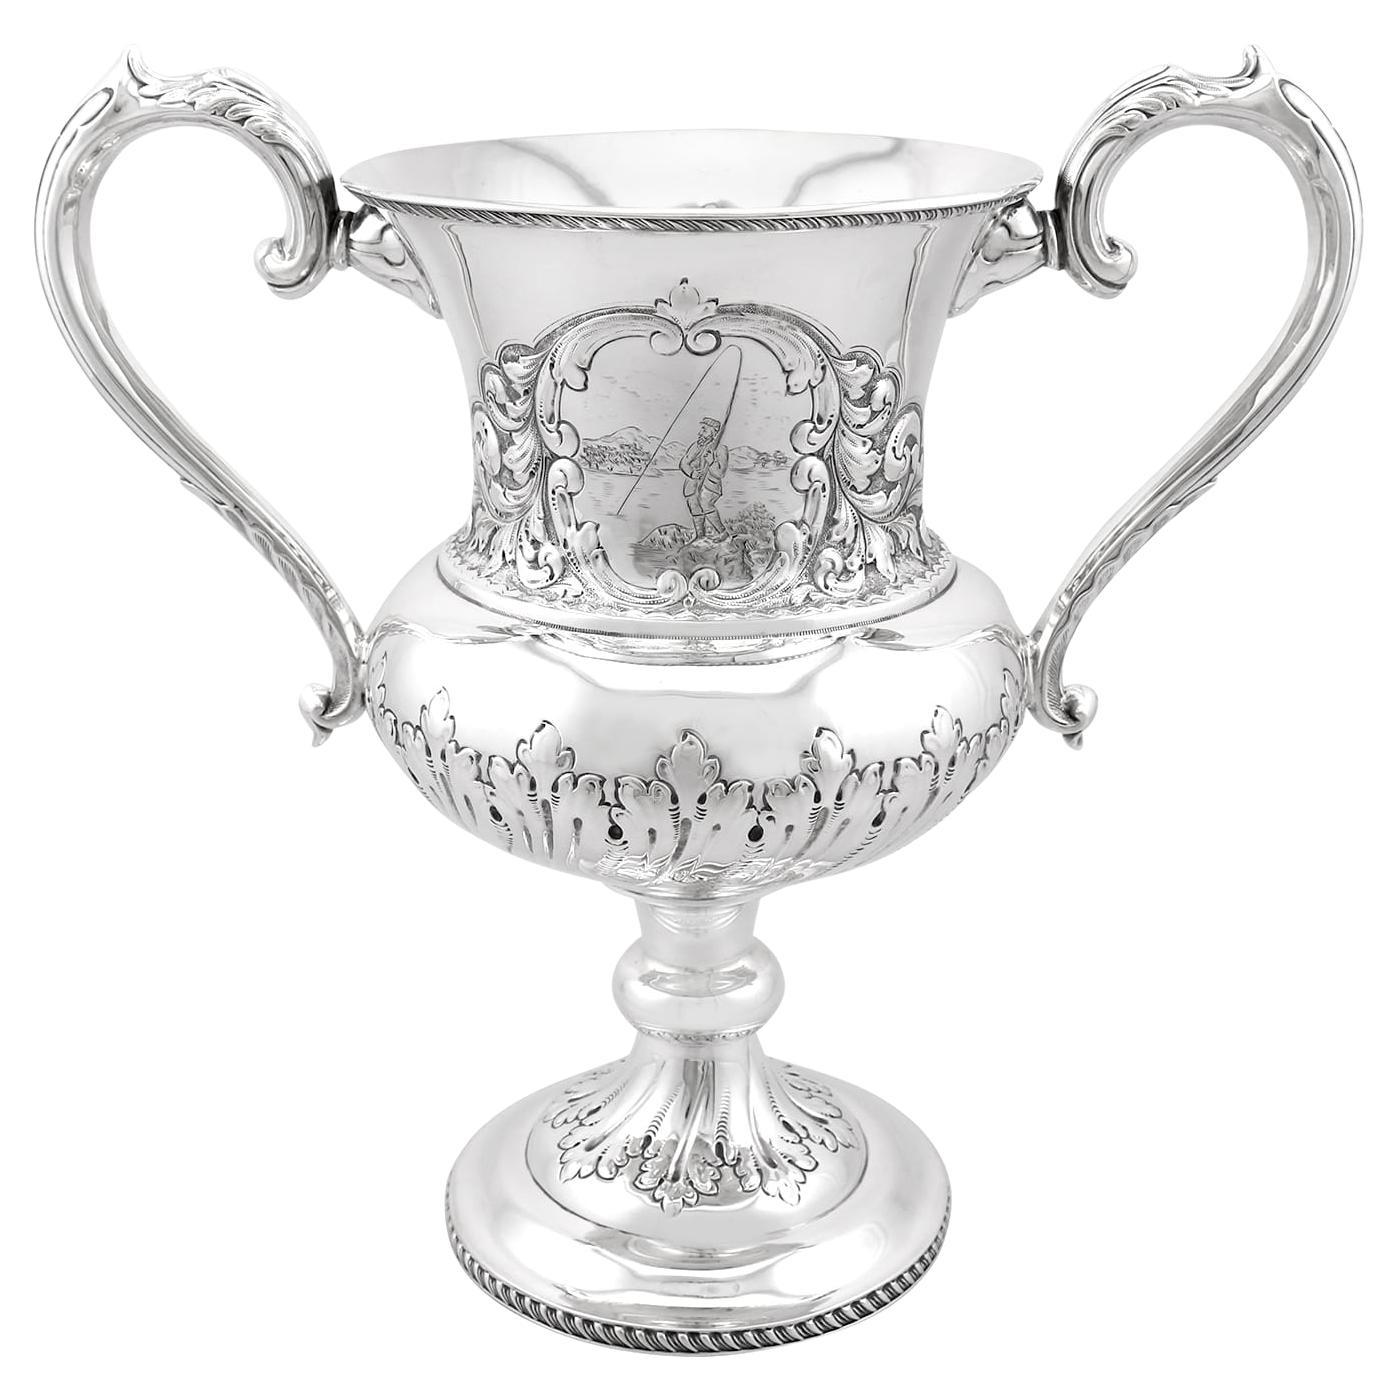 Antique Edwardian Sterling Silver Presentation Cup